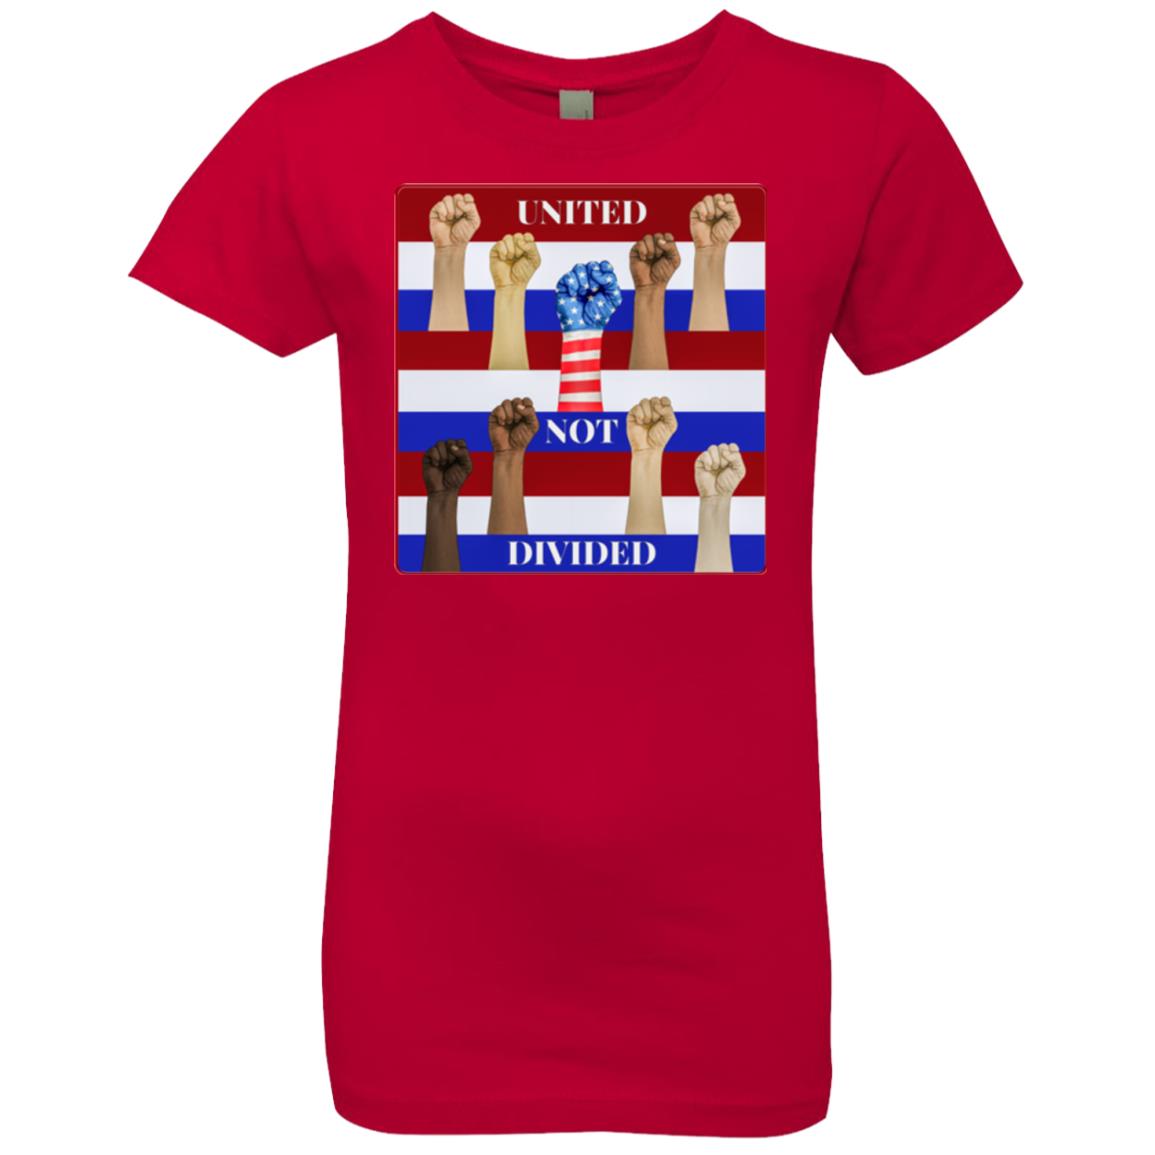 united not divided - Girl's Premium Cotton T-Shirt